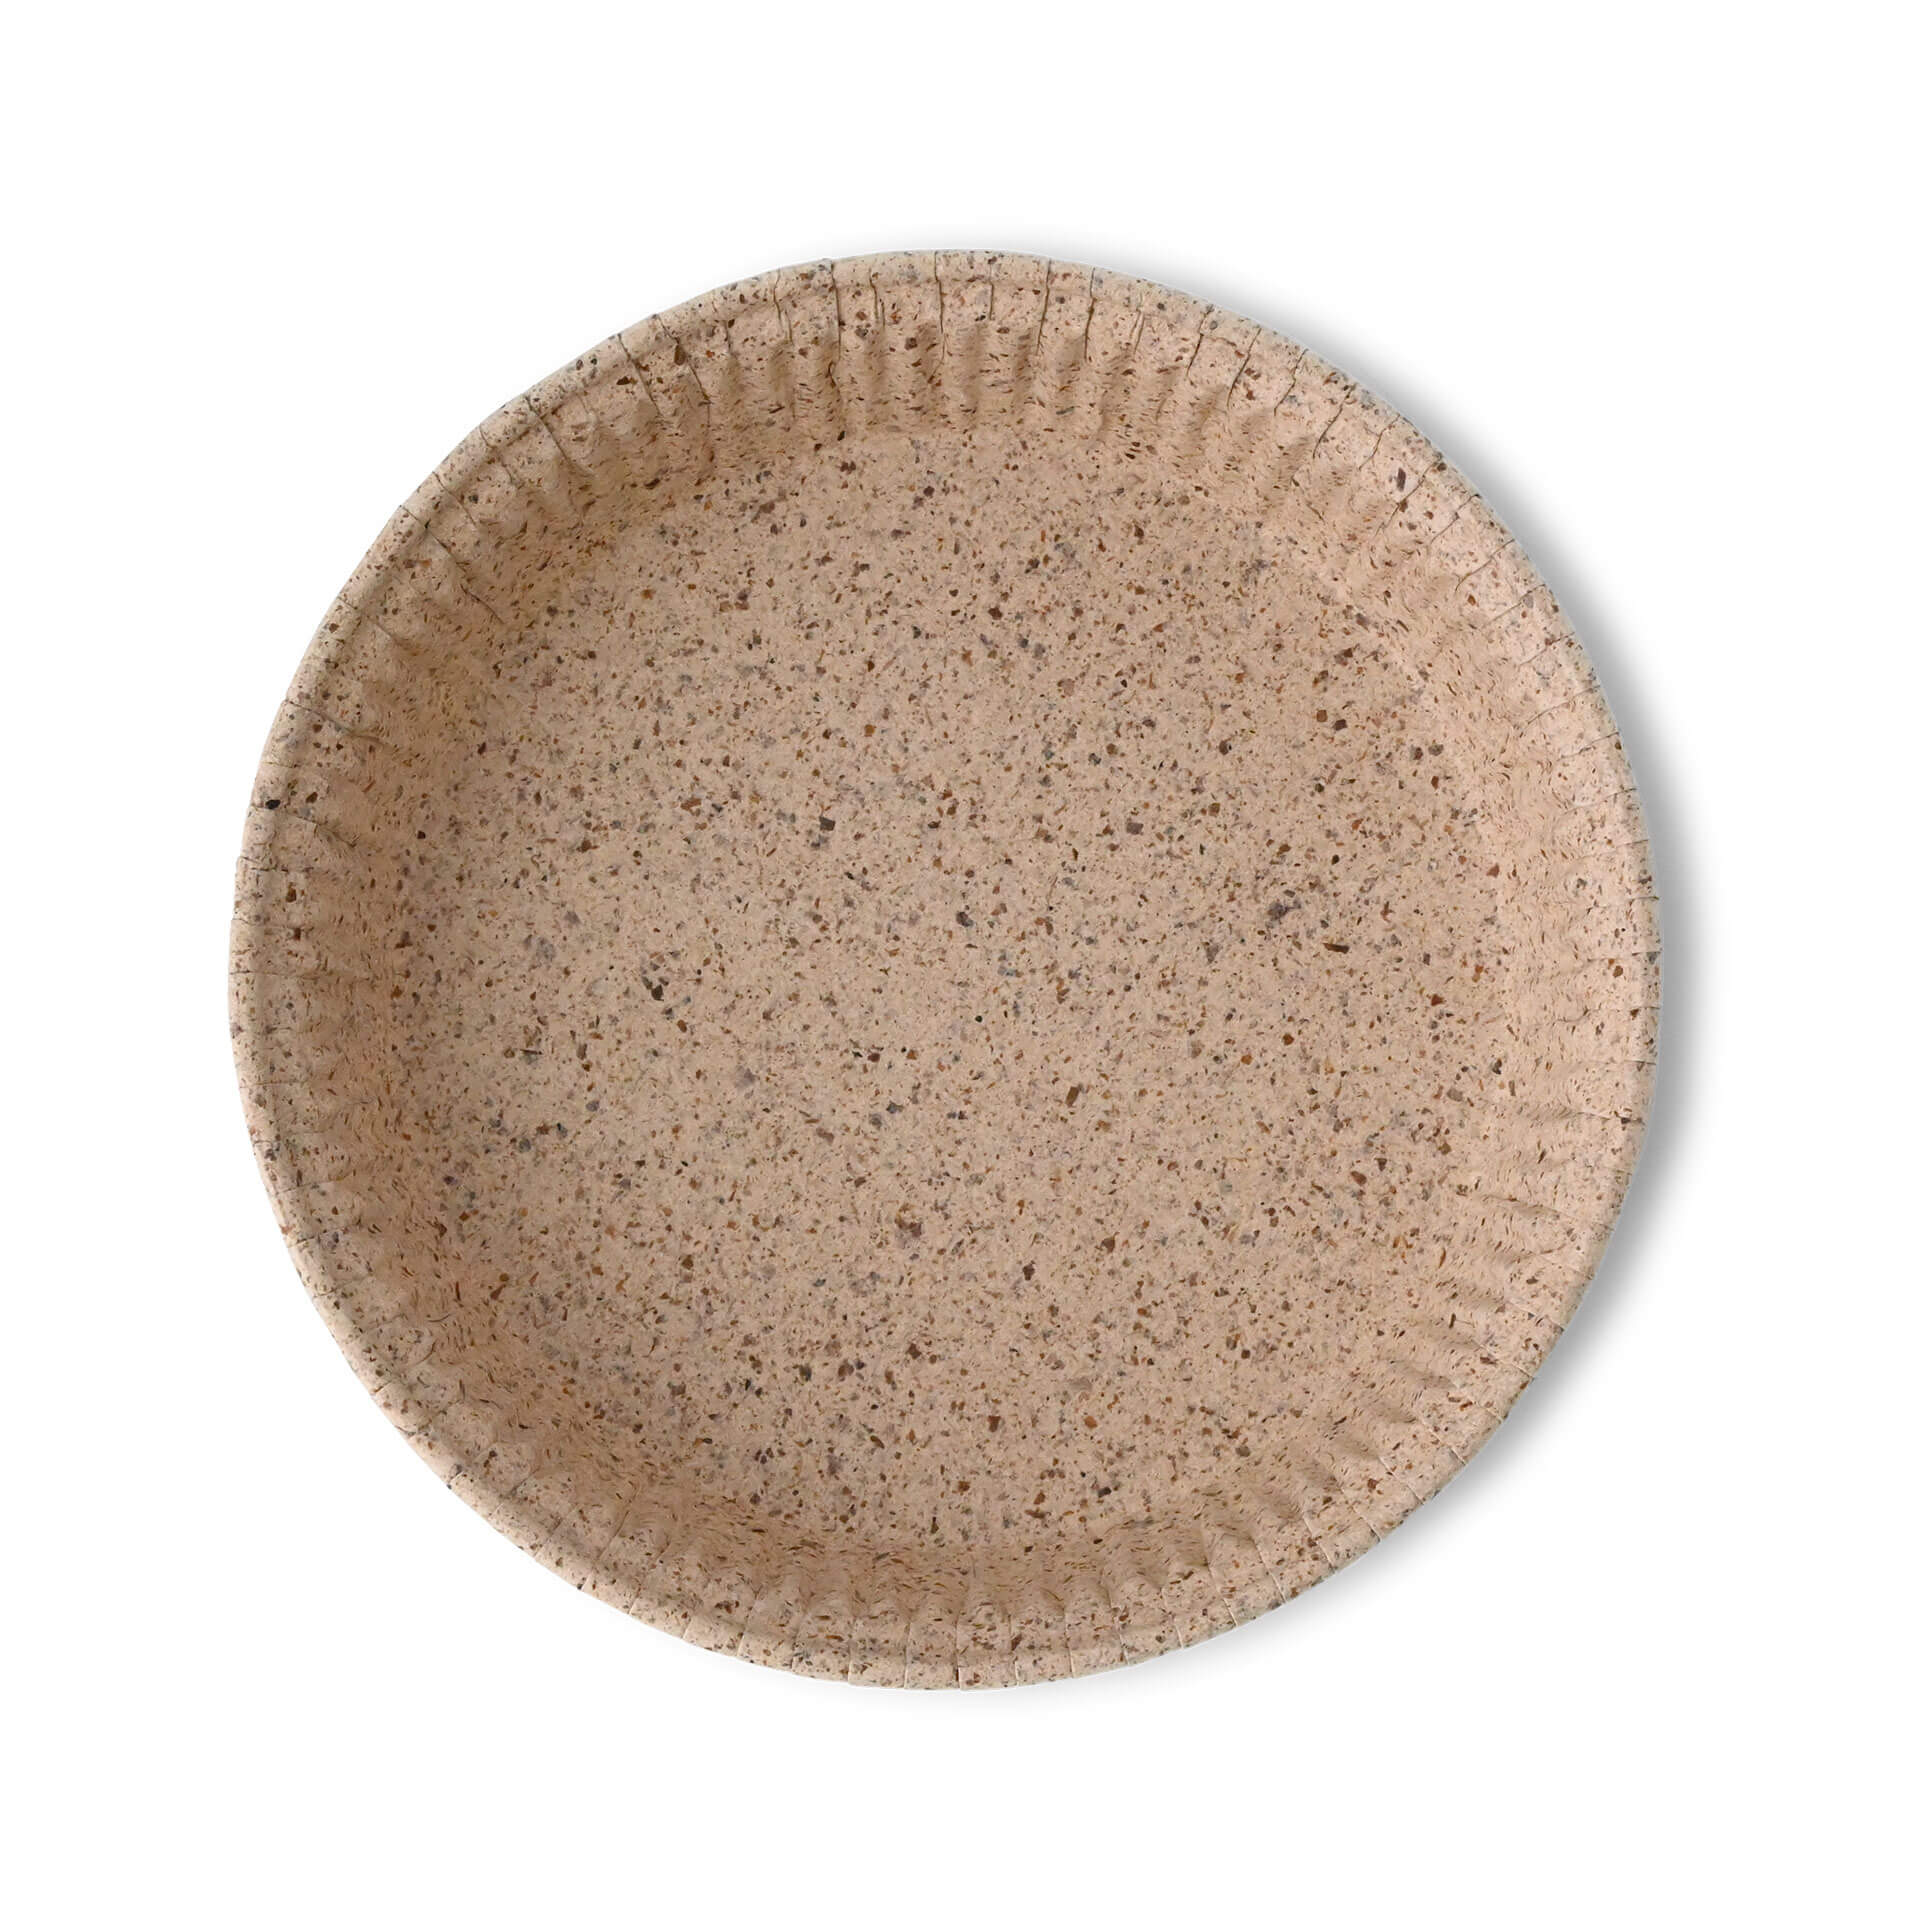 Kakaopapier-Backformen Ø 9 cm, rund, braun